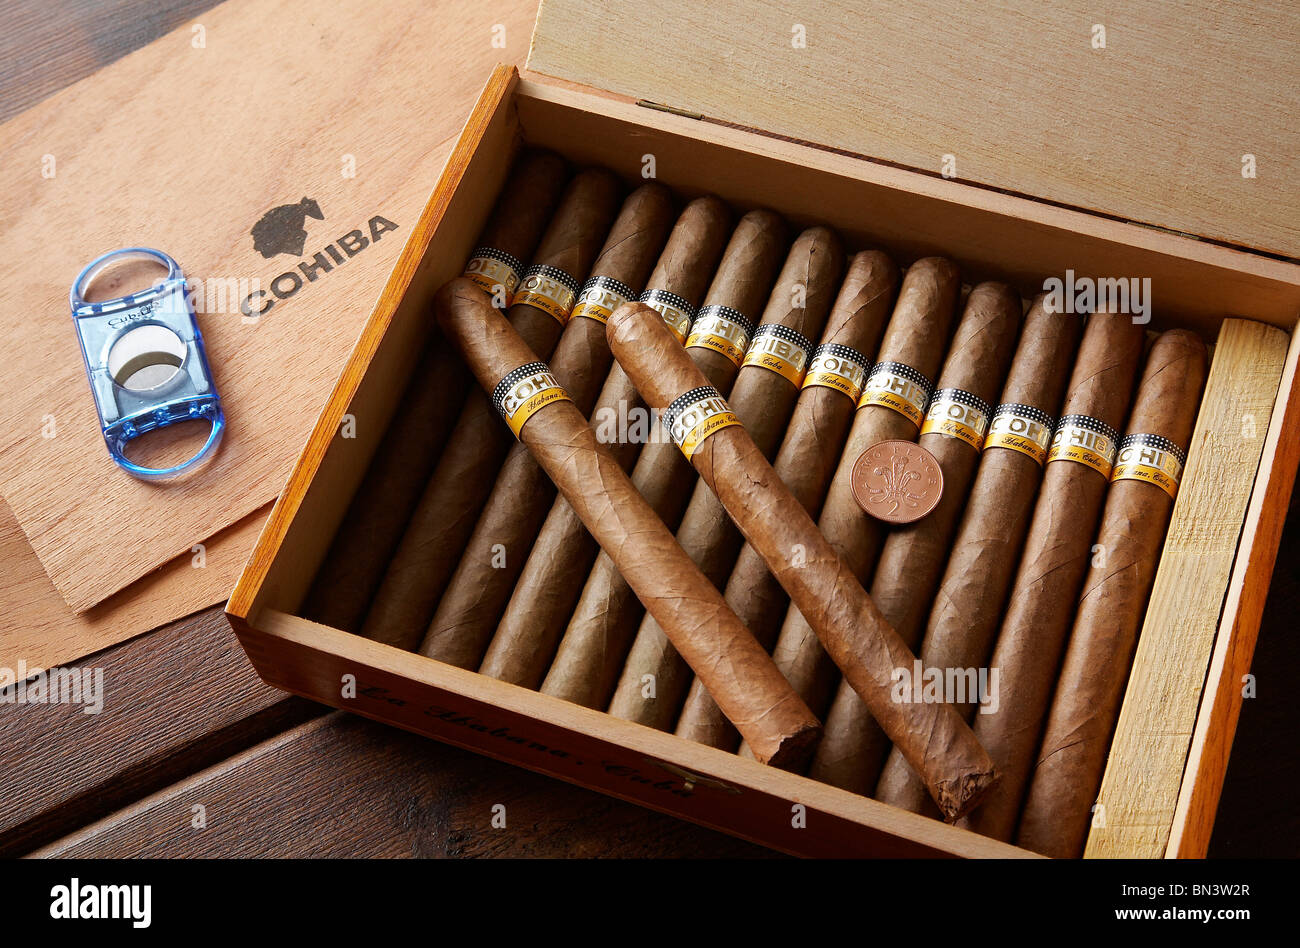 A box of large cohiba Cuban cigars. Stock Photo